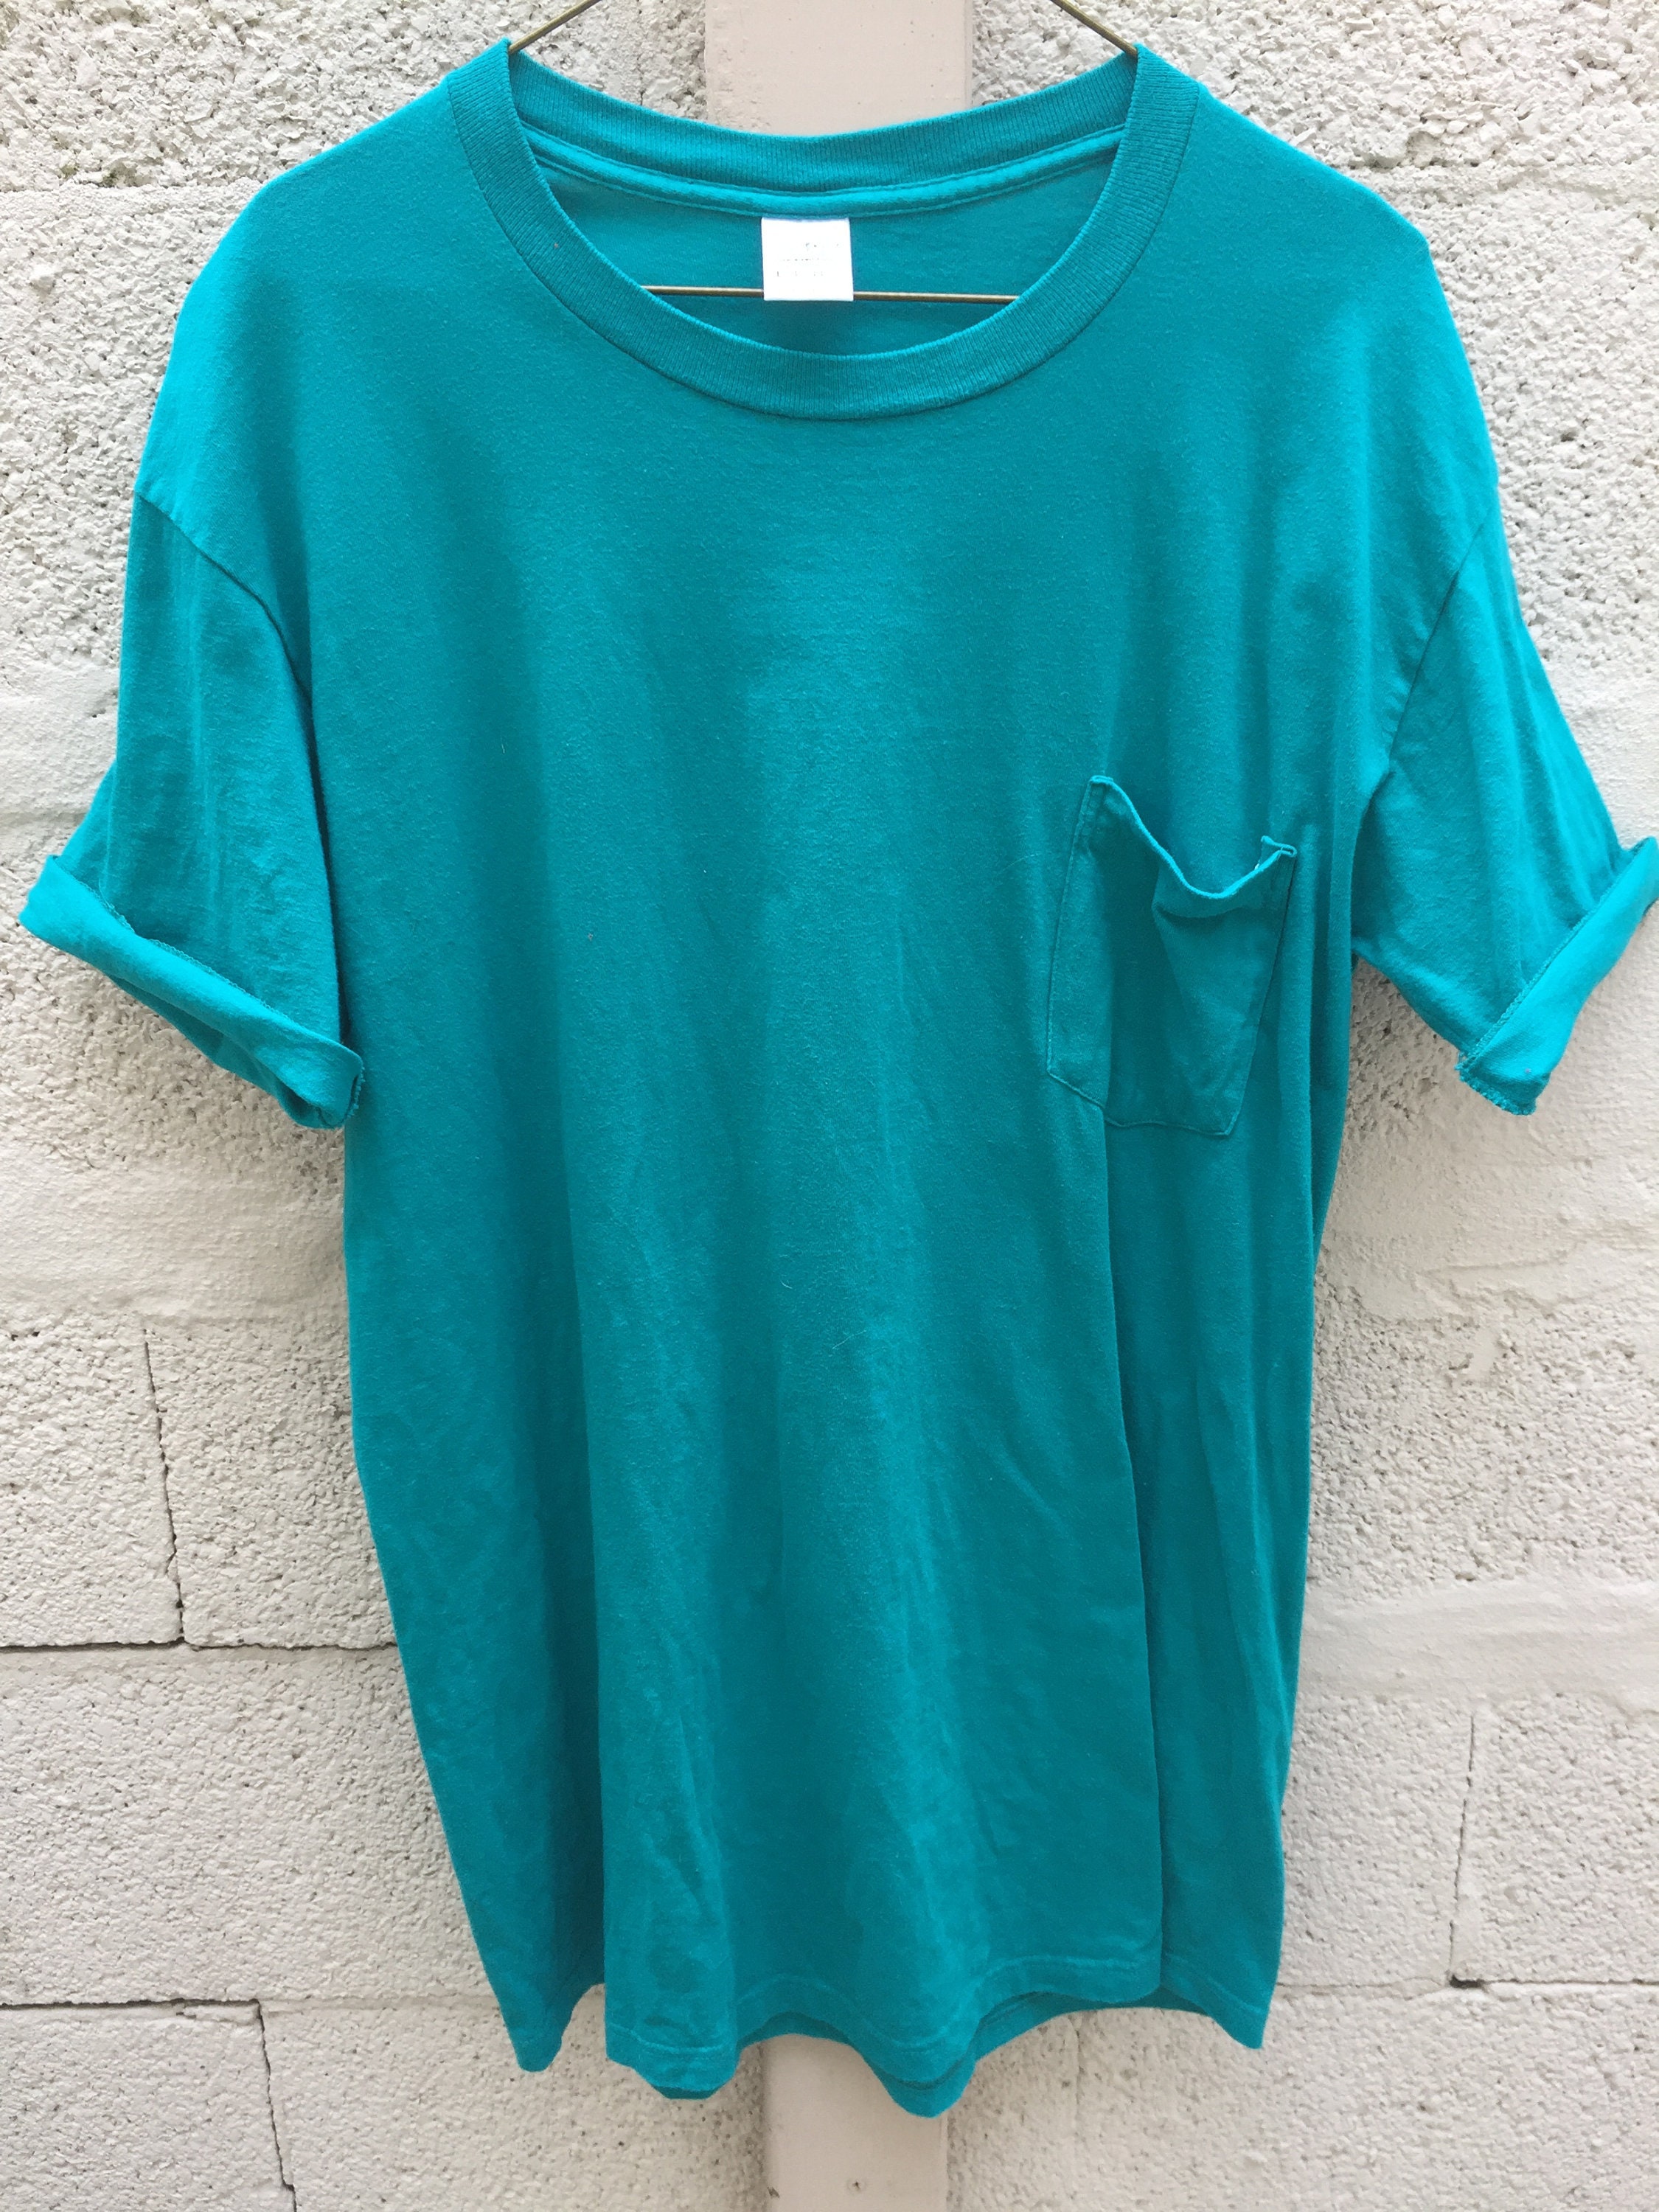 Teal JC Penney Towncraft Pocket T Shirt adult Medium Large | Etsy